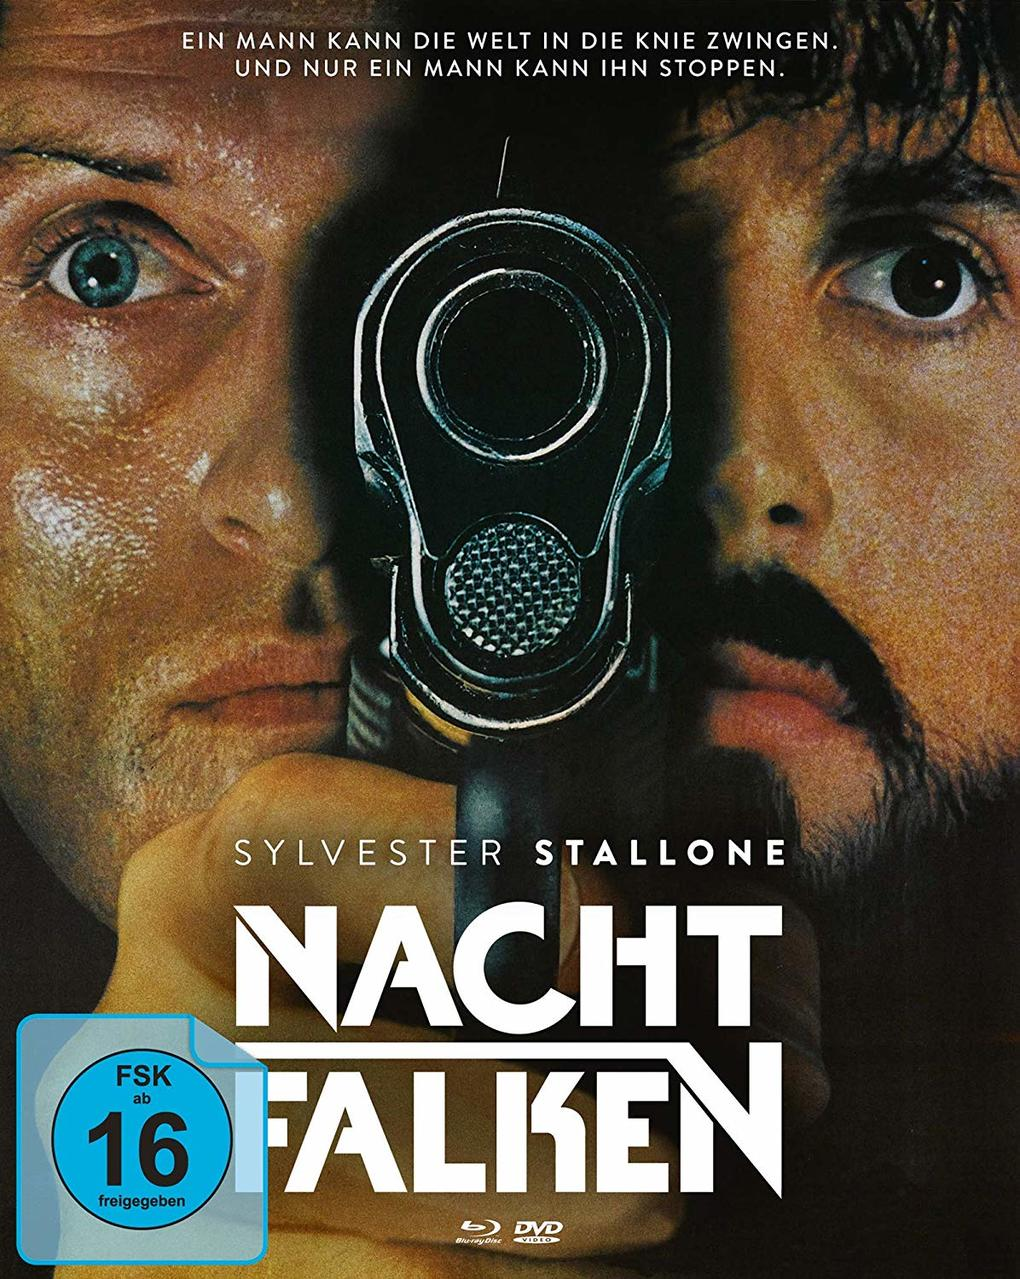 Blu-ray - DVD Edition + Mediabook Limited Nachtfalken